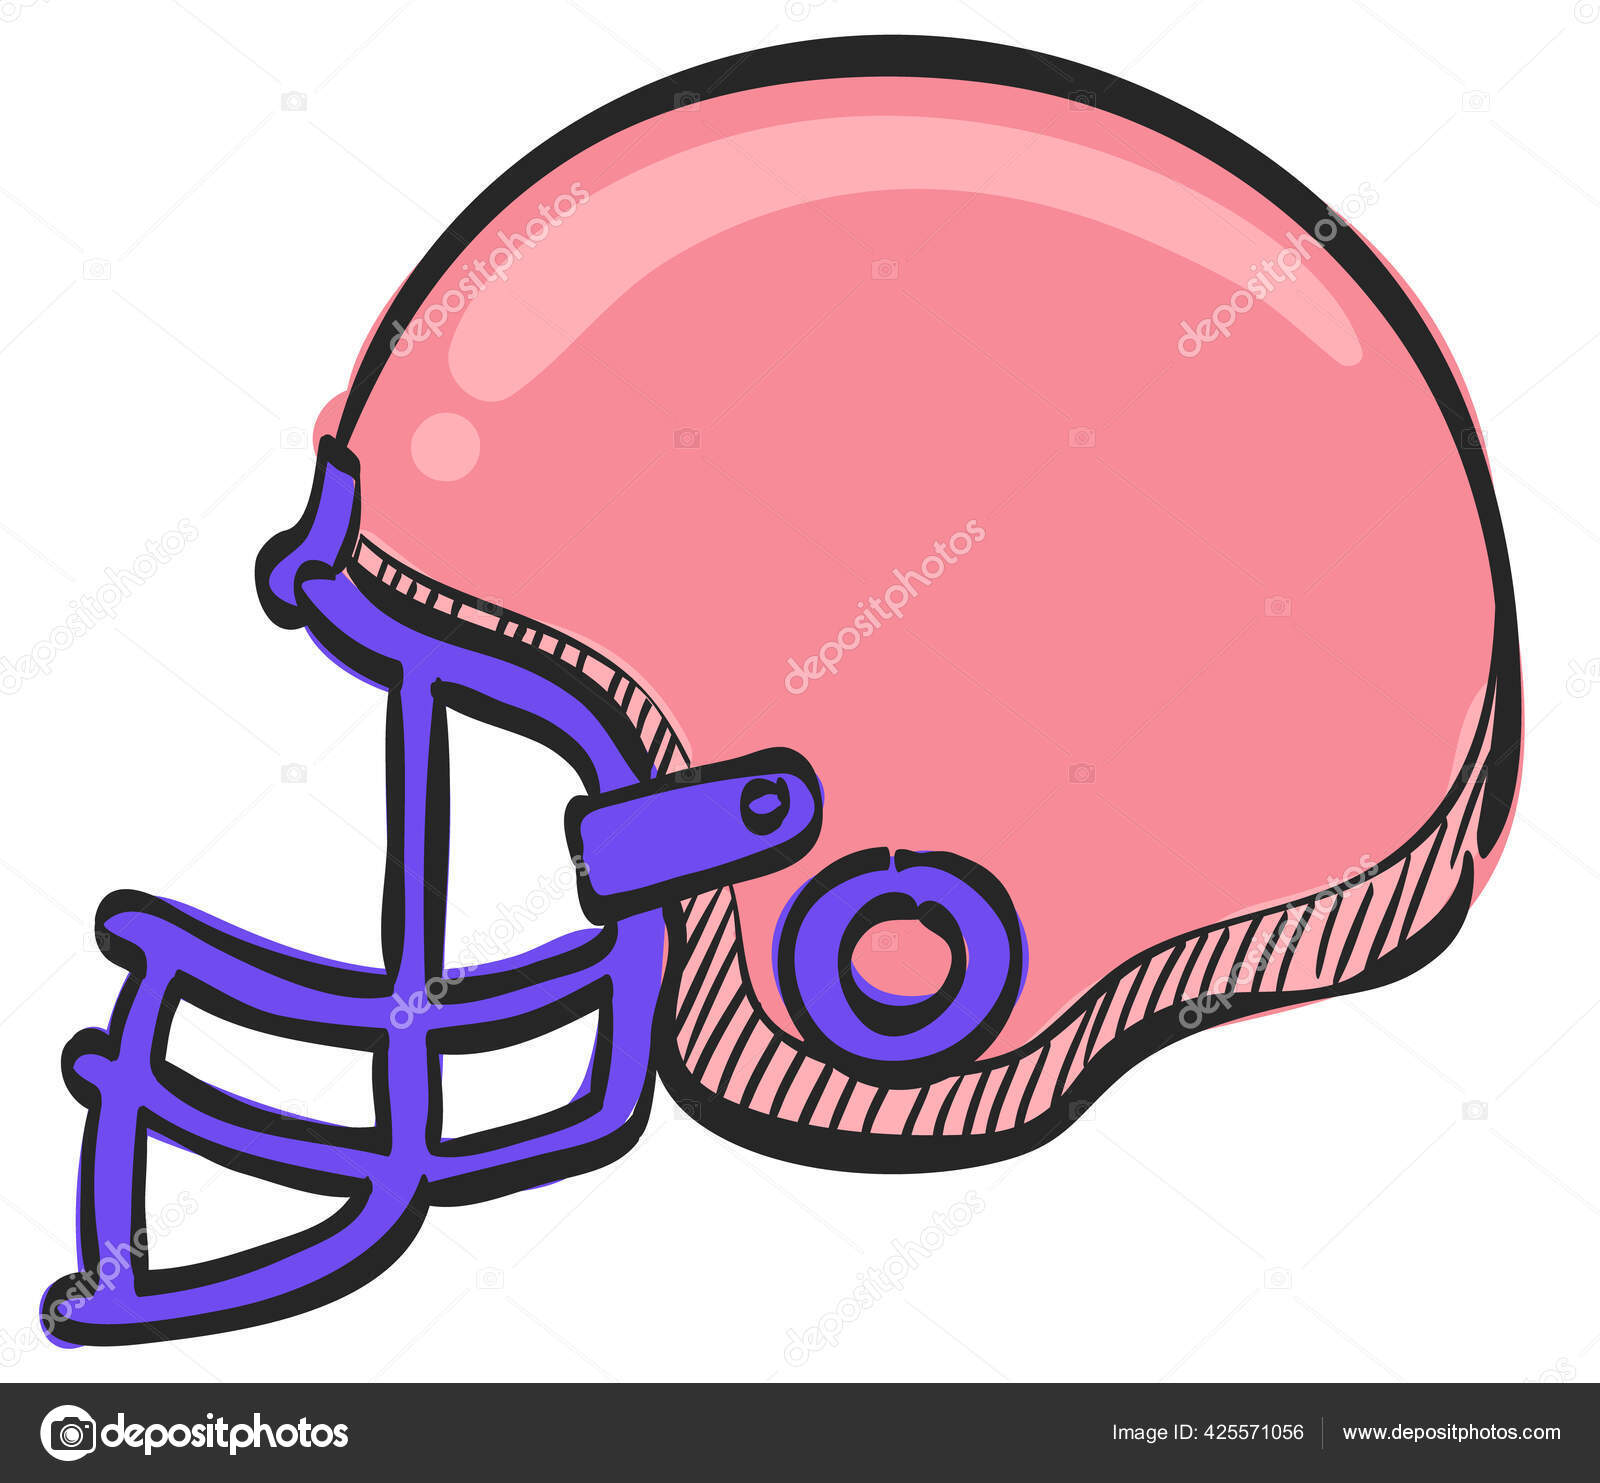 American Football Helmet Blueprints Stock Illustration - Download